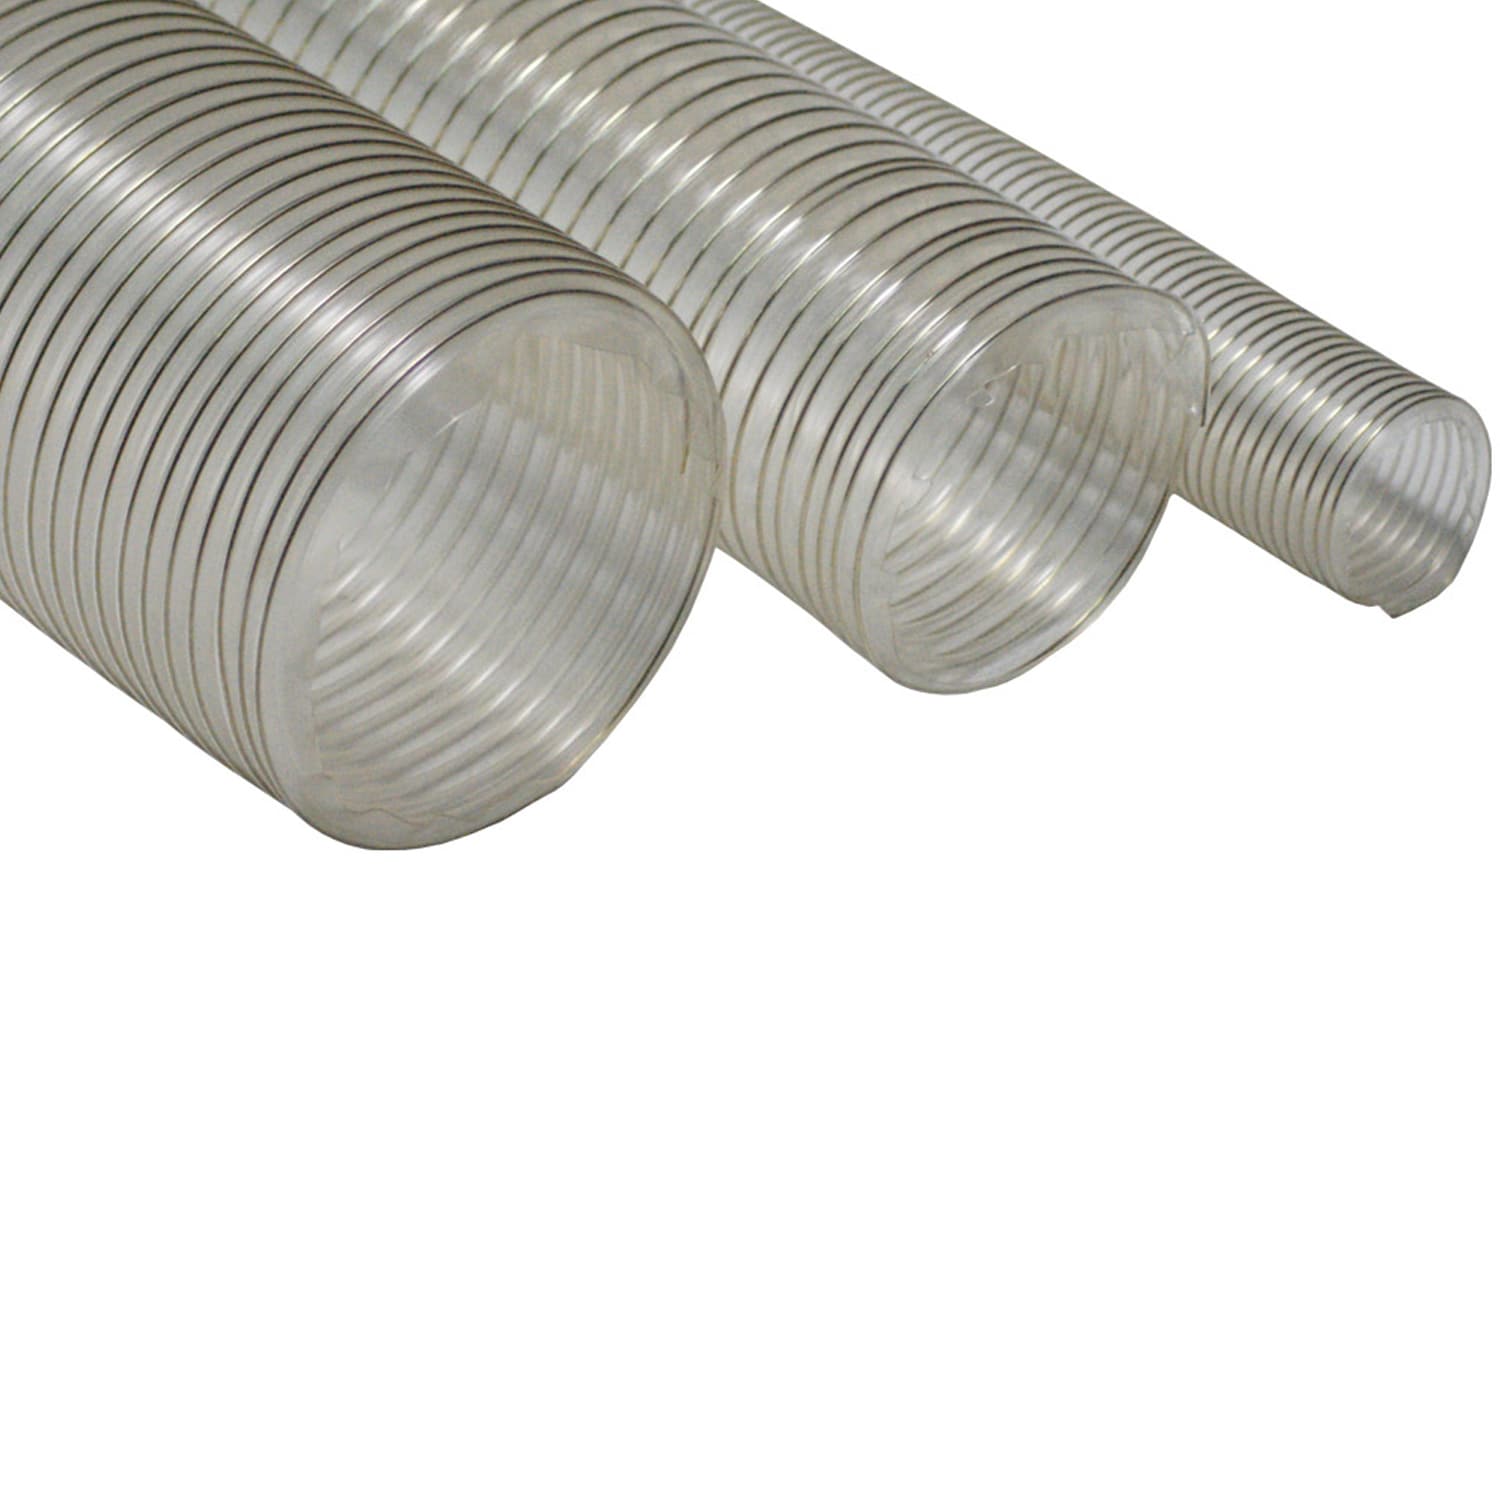 IIVVERR 12m Long 20mm Dia PVC Flexible Corrugated Tubing Cable Conduit Hose  (Manguera de conducto de tubo corrugado flexible de PVC de 12 m de largo y